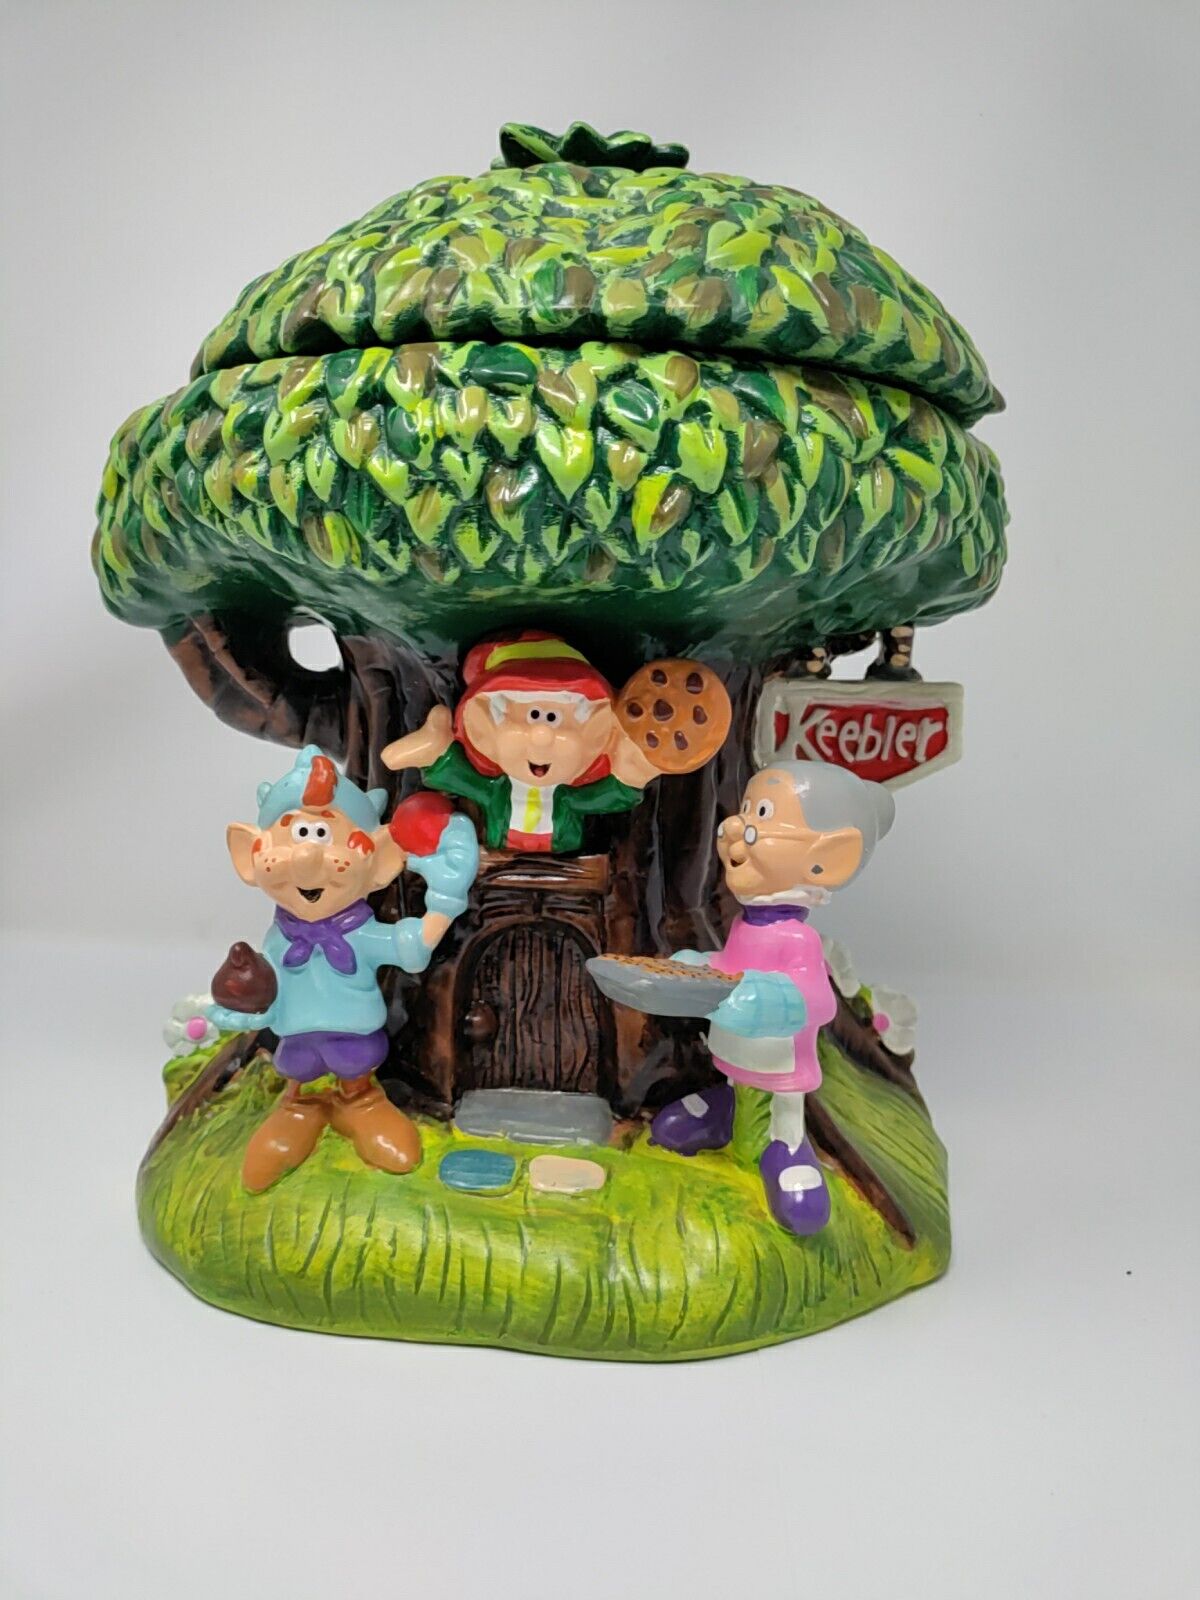 Keebler Hollow Tree Elves Cookie Jar Limited Edition 2000 